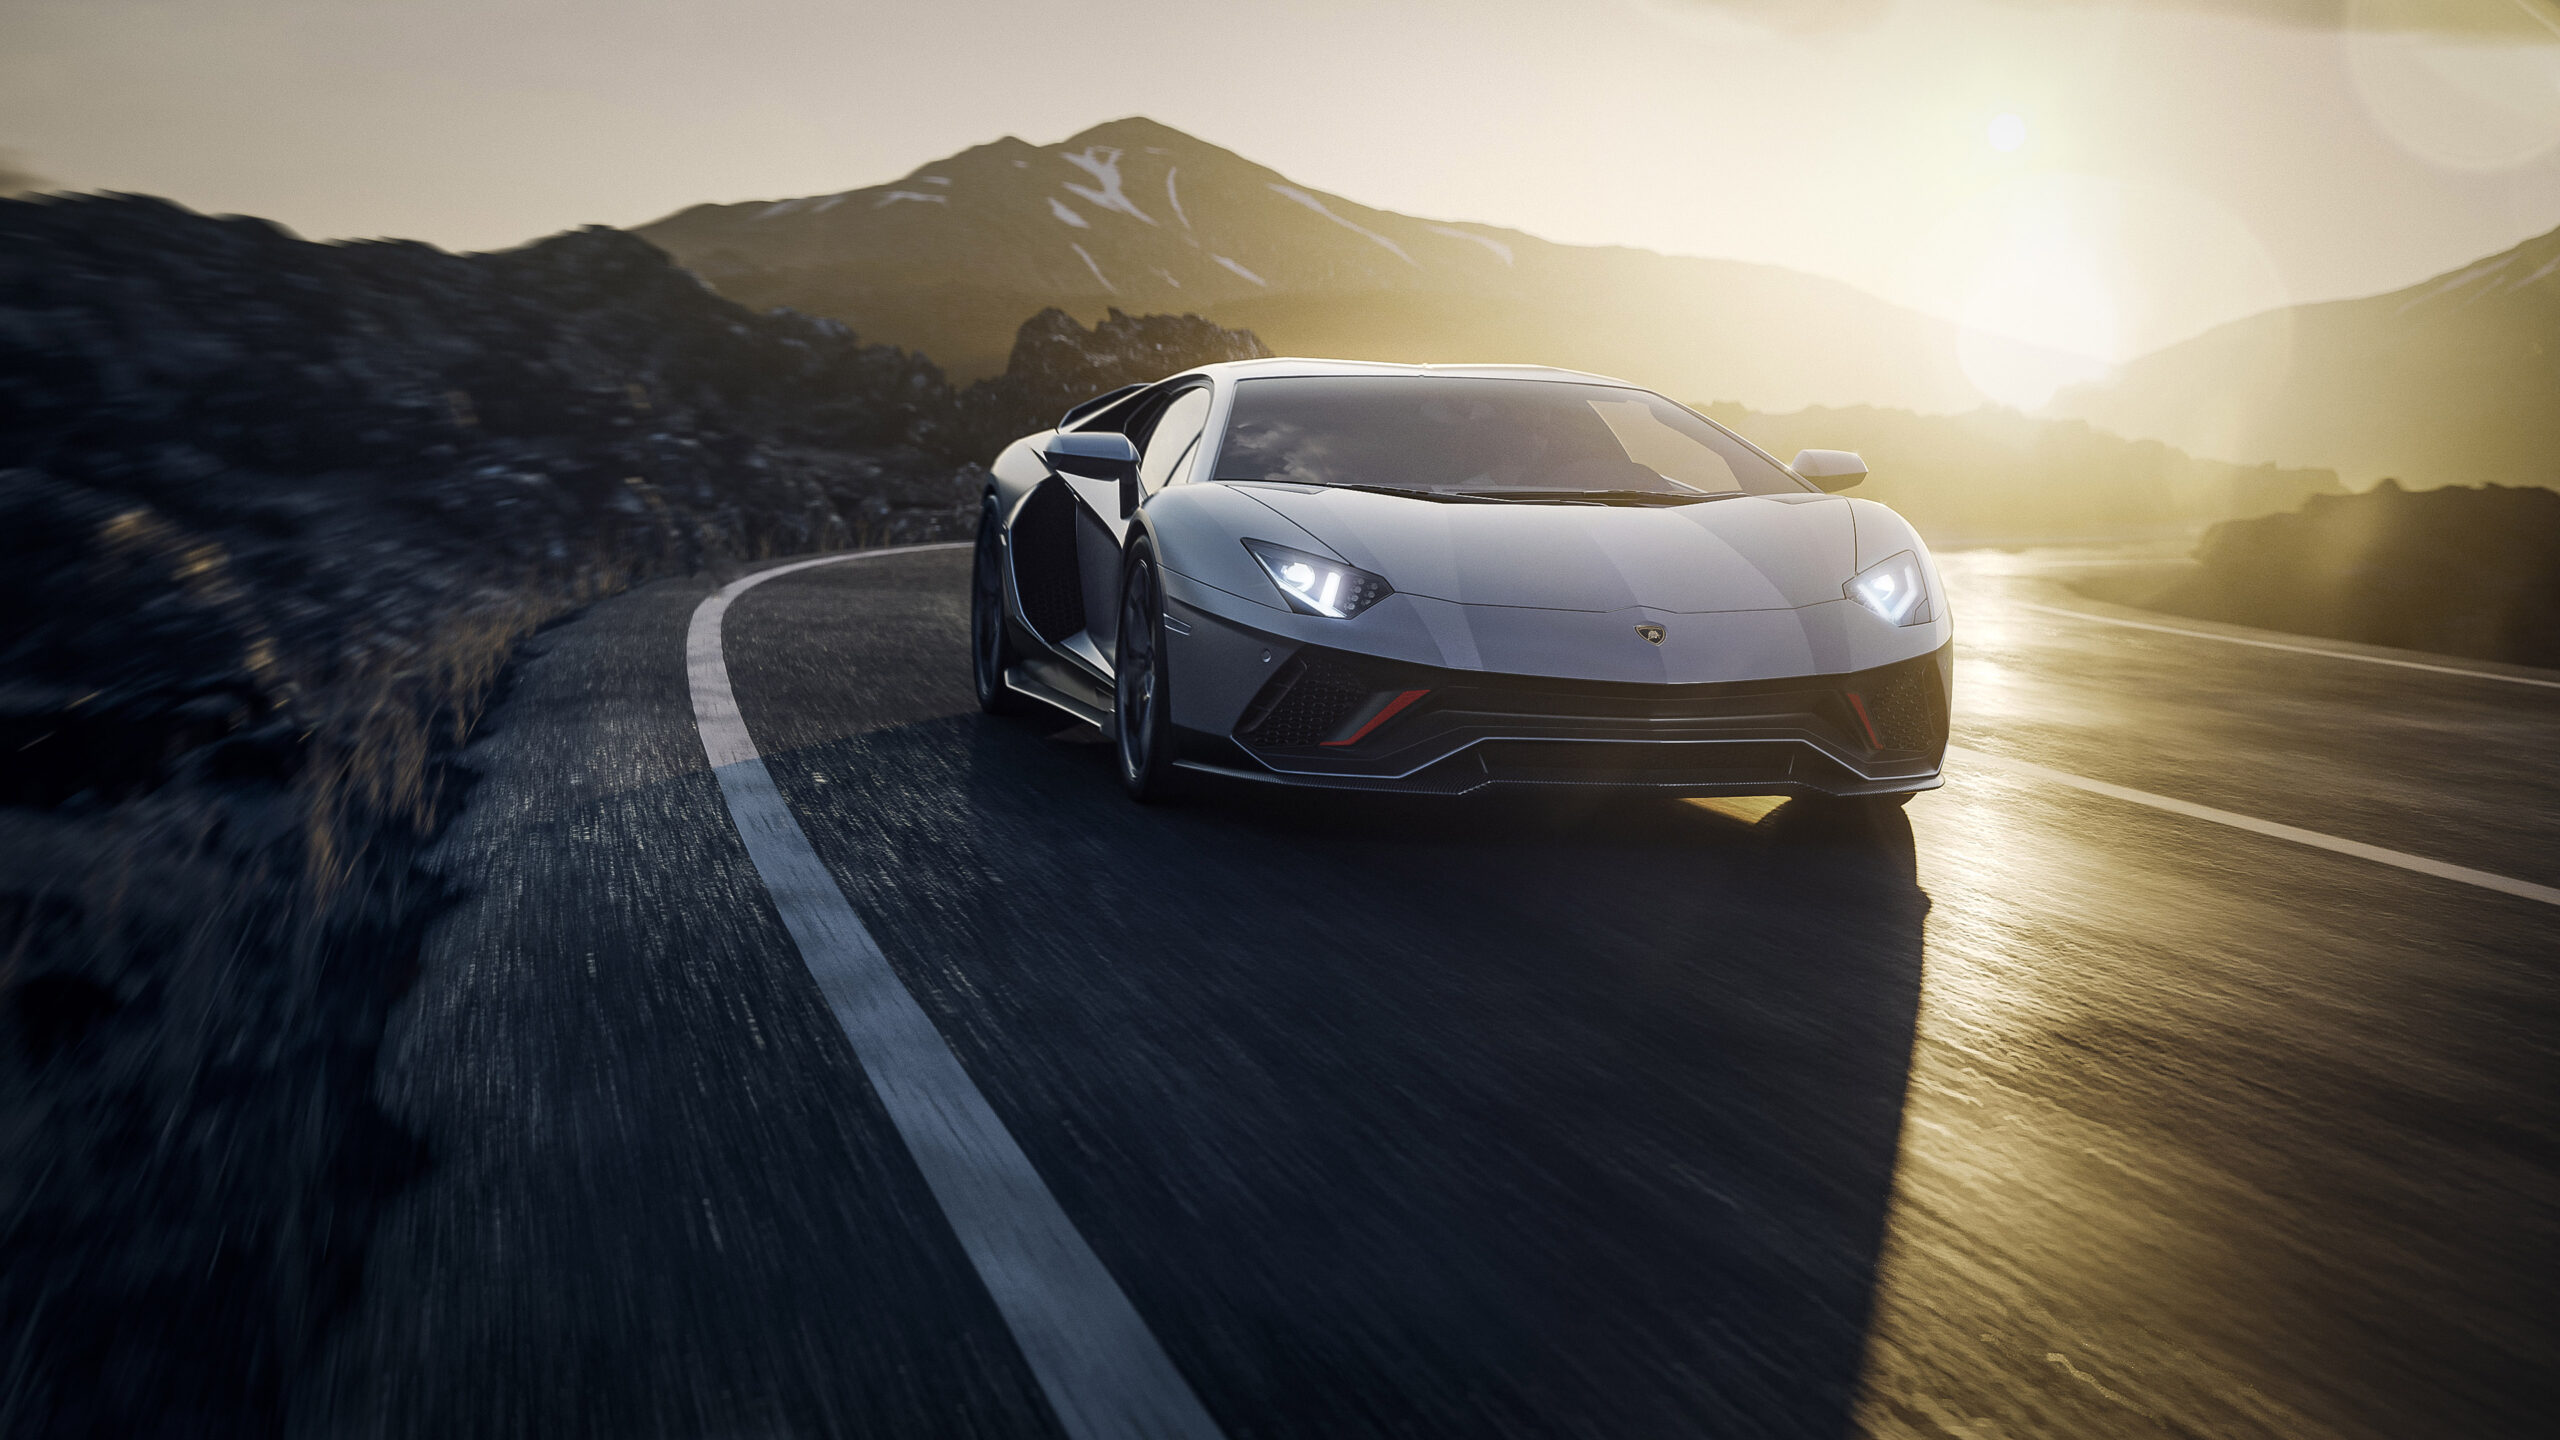 [35+] Lamborghini Full HD Wallpapers - WallpaperSafari